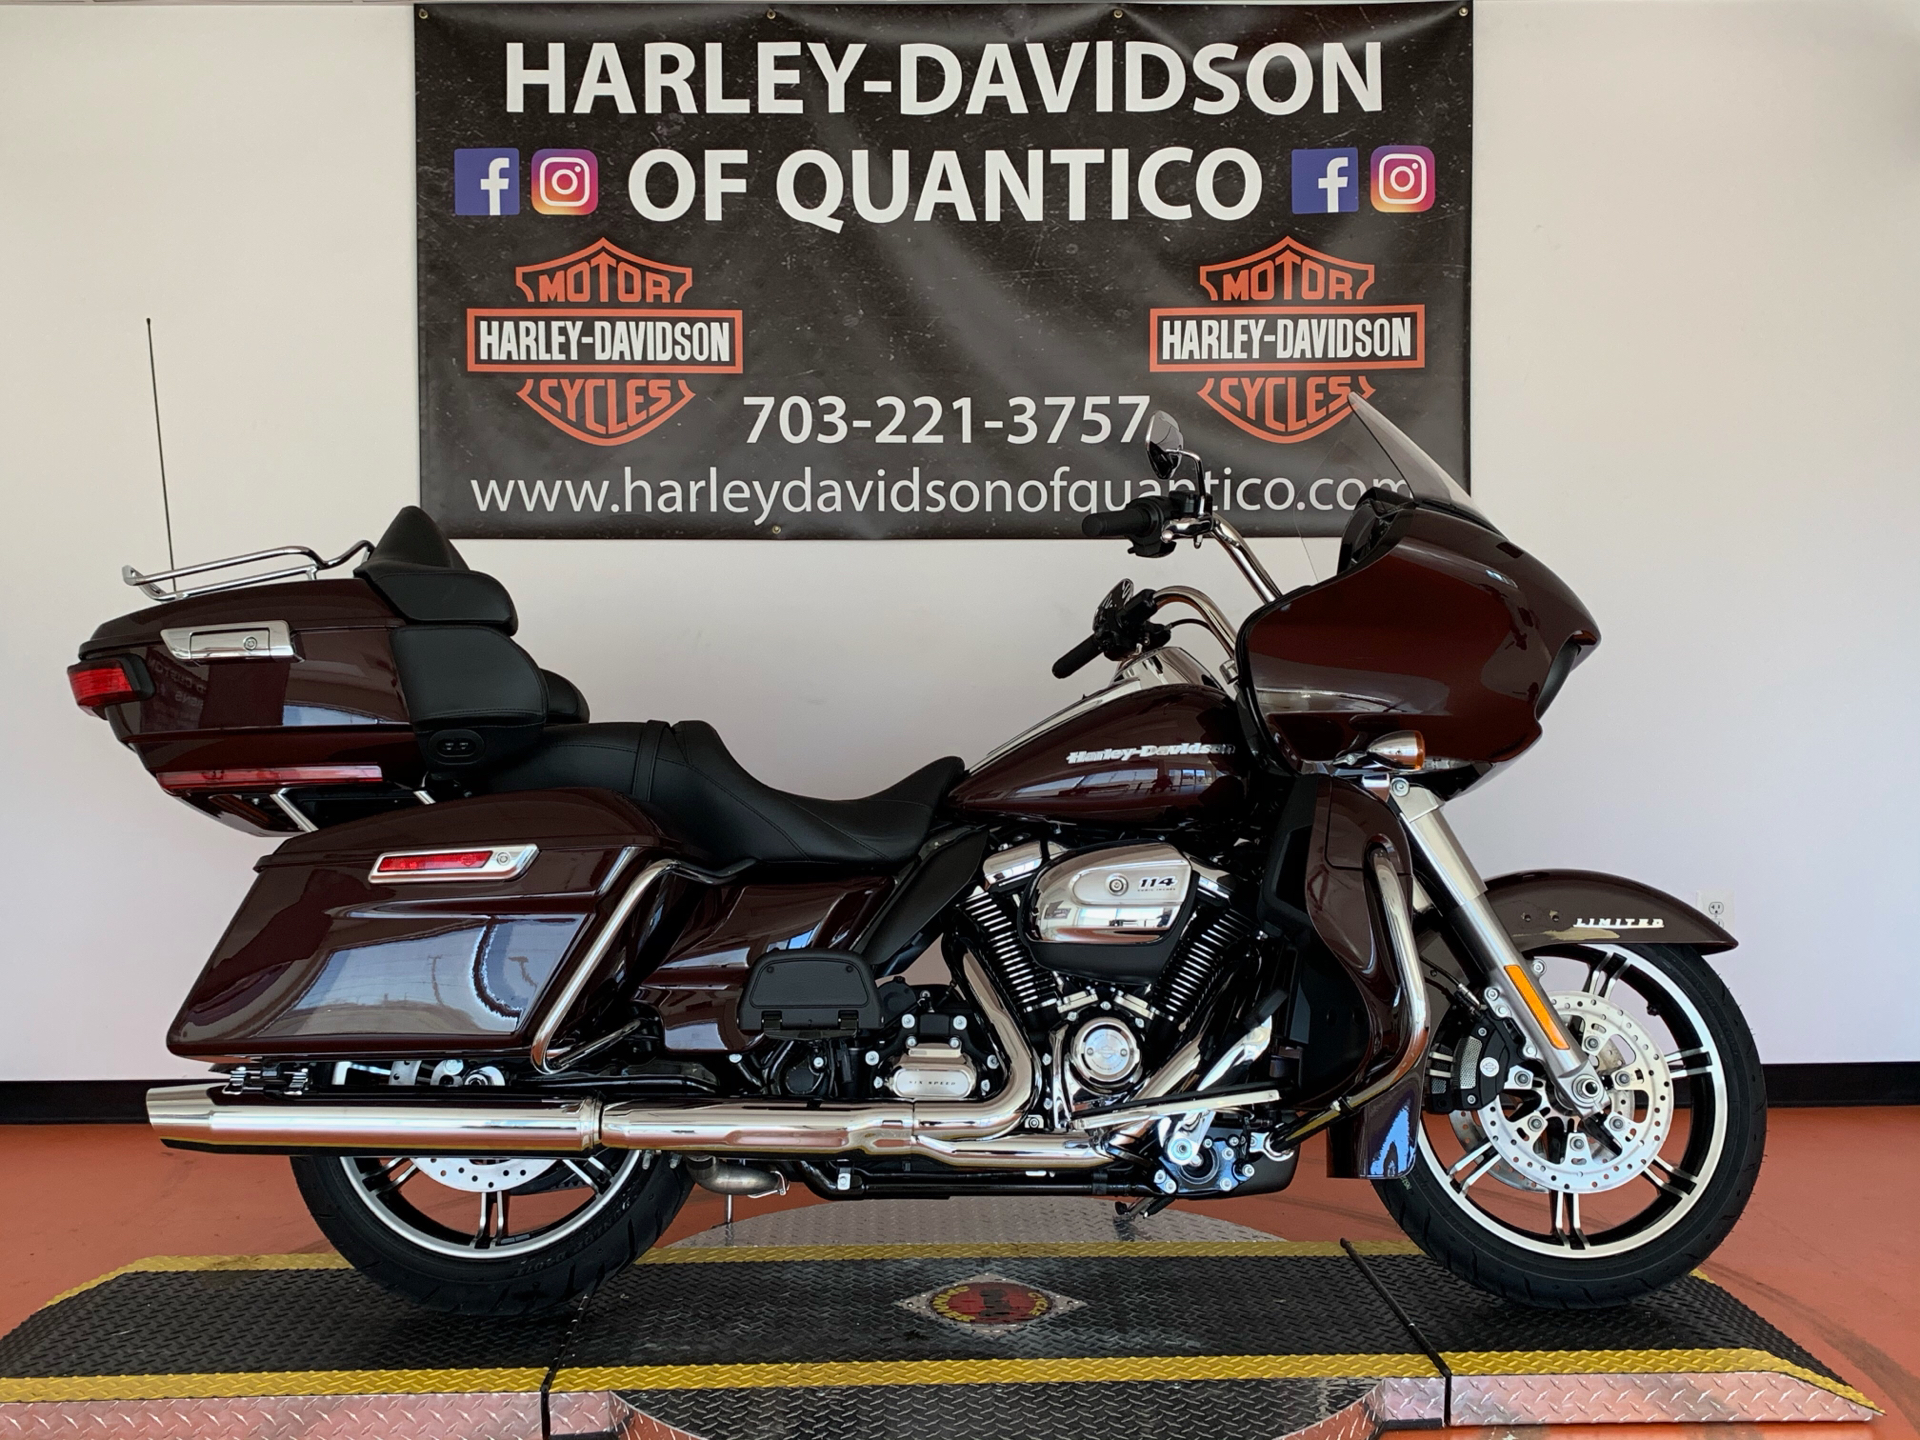 New 2021 Harley Davidson Road Glide Limited Midnight Crimson Motorcycles In Dumfries Va 606594